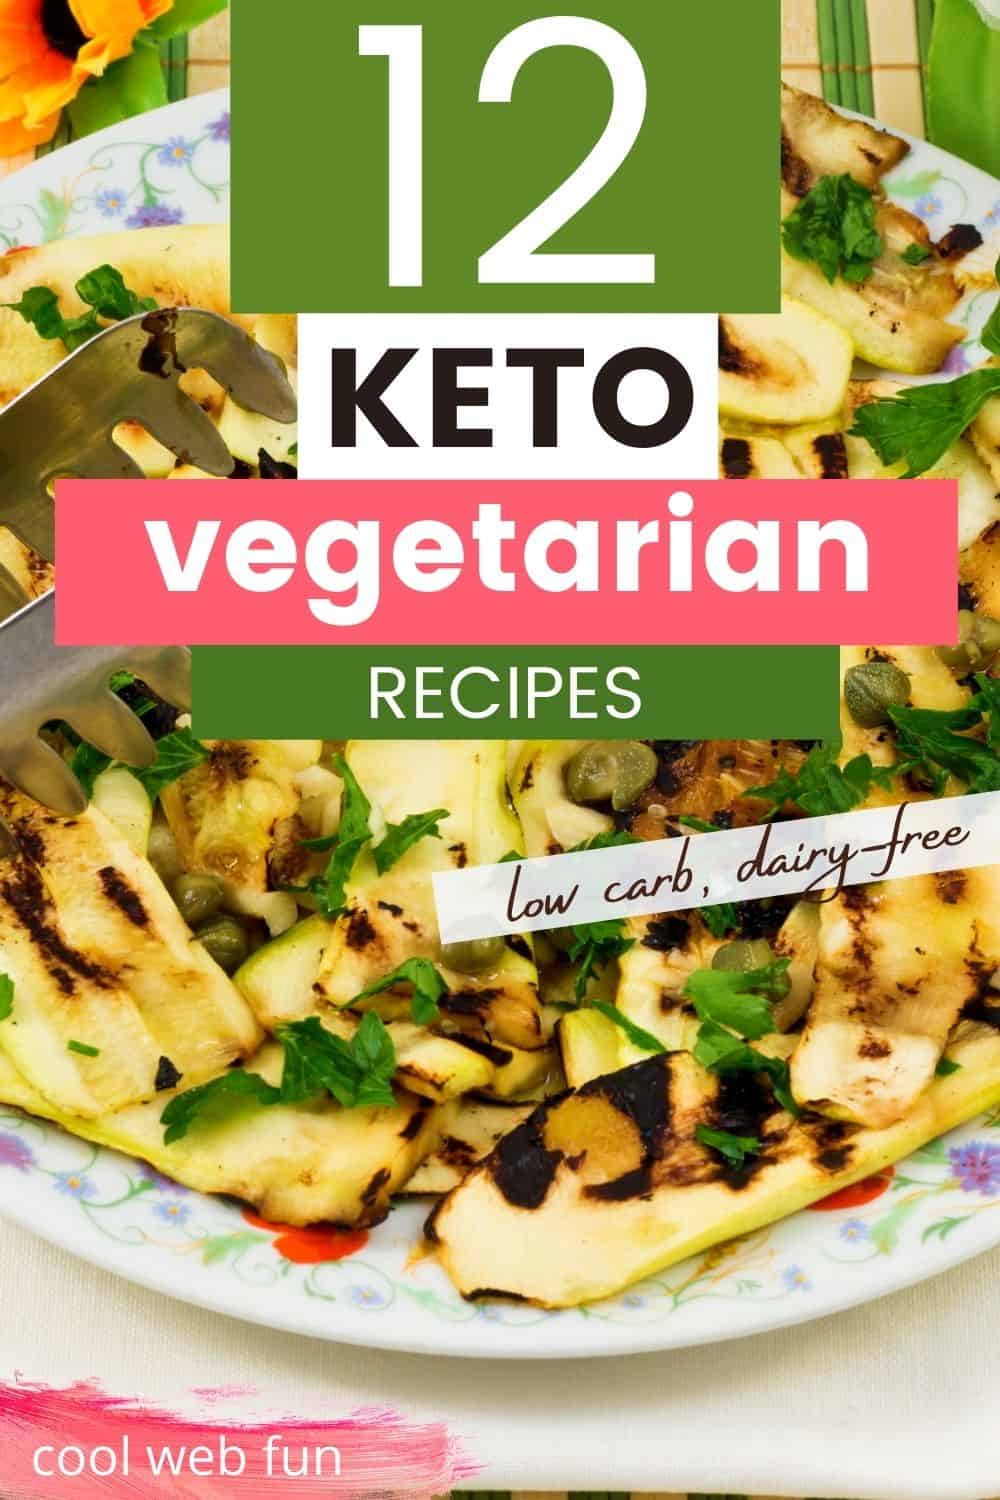 keto veg recipes - Cool Web Fun